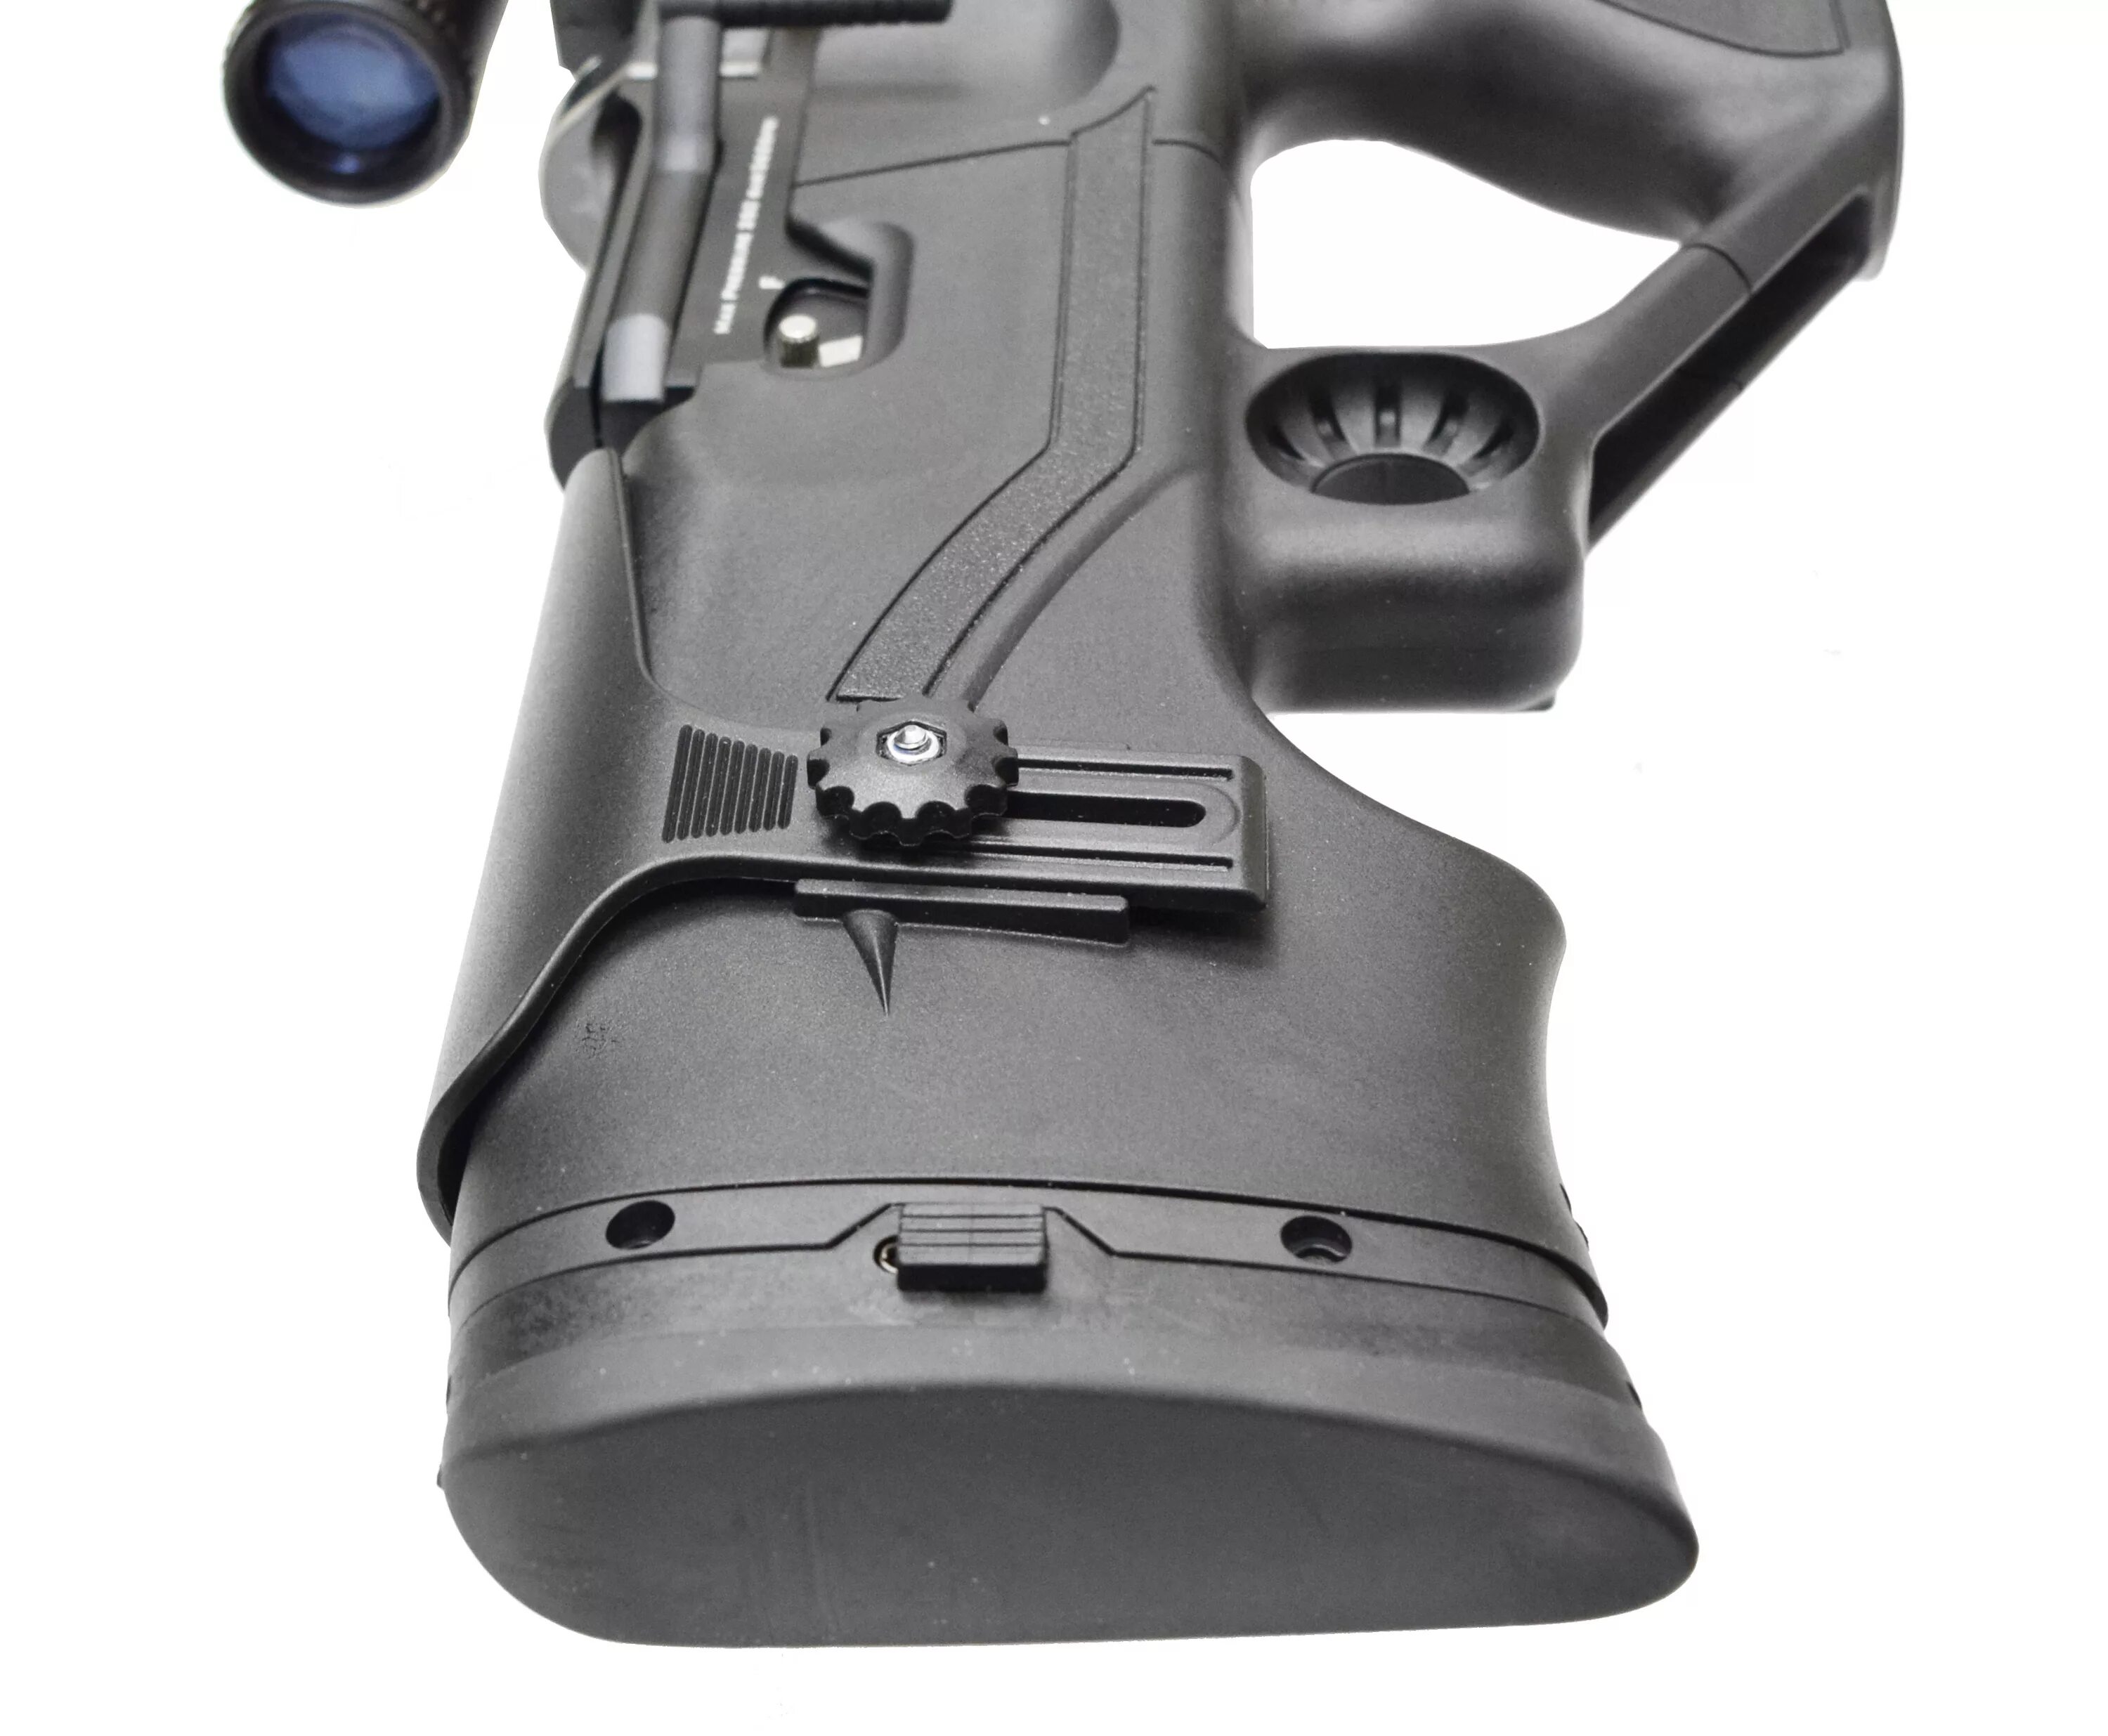 Kral maxi 3 6.35. Крал Панчер макси 6.35. PCP Kral Puncher 6.35 мм Maxi. Пневматическая винтовка Kral Puncher Maxi s (пластик, PCP, 3 Дж) 6,35 мм. Kral Puncher Maxi 3 Mortal 6.35 мм.